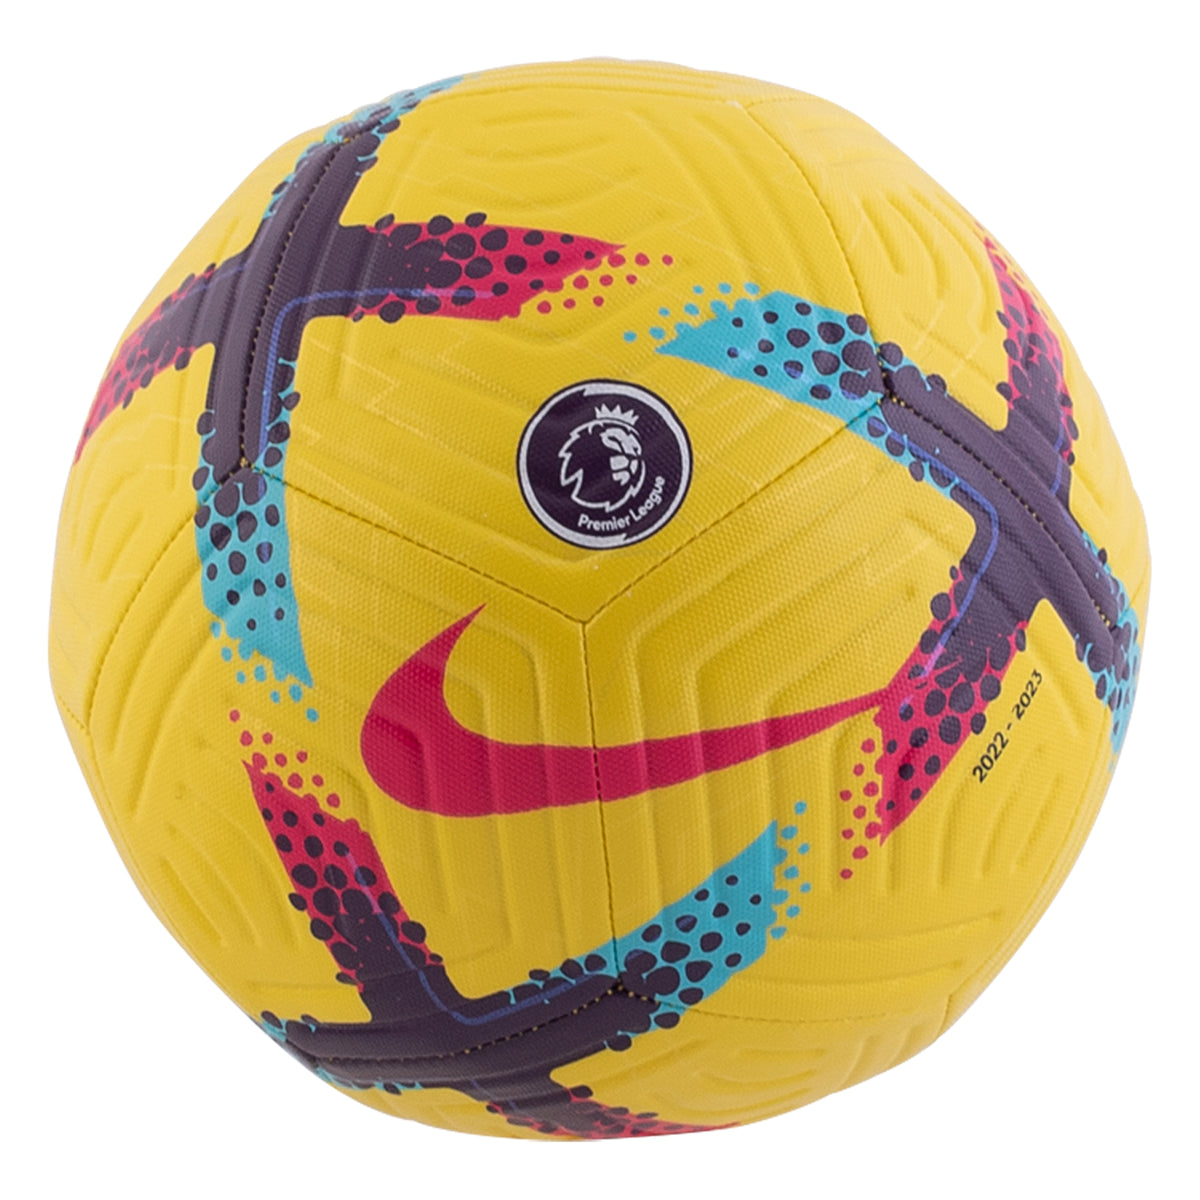 Nike 2023/24 Premier League Academy Official Size 3 Soccer Ball